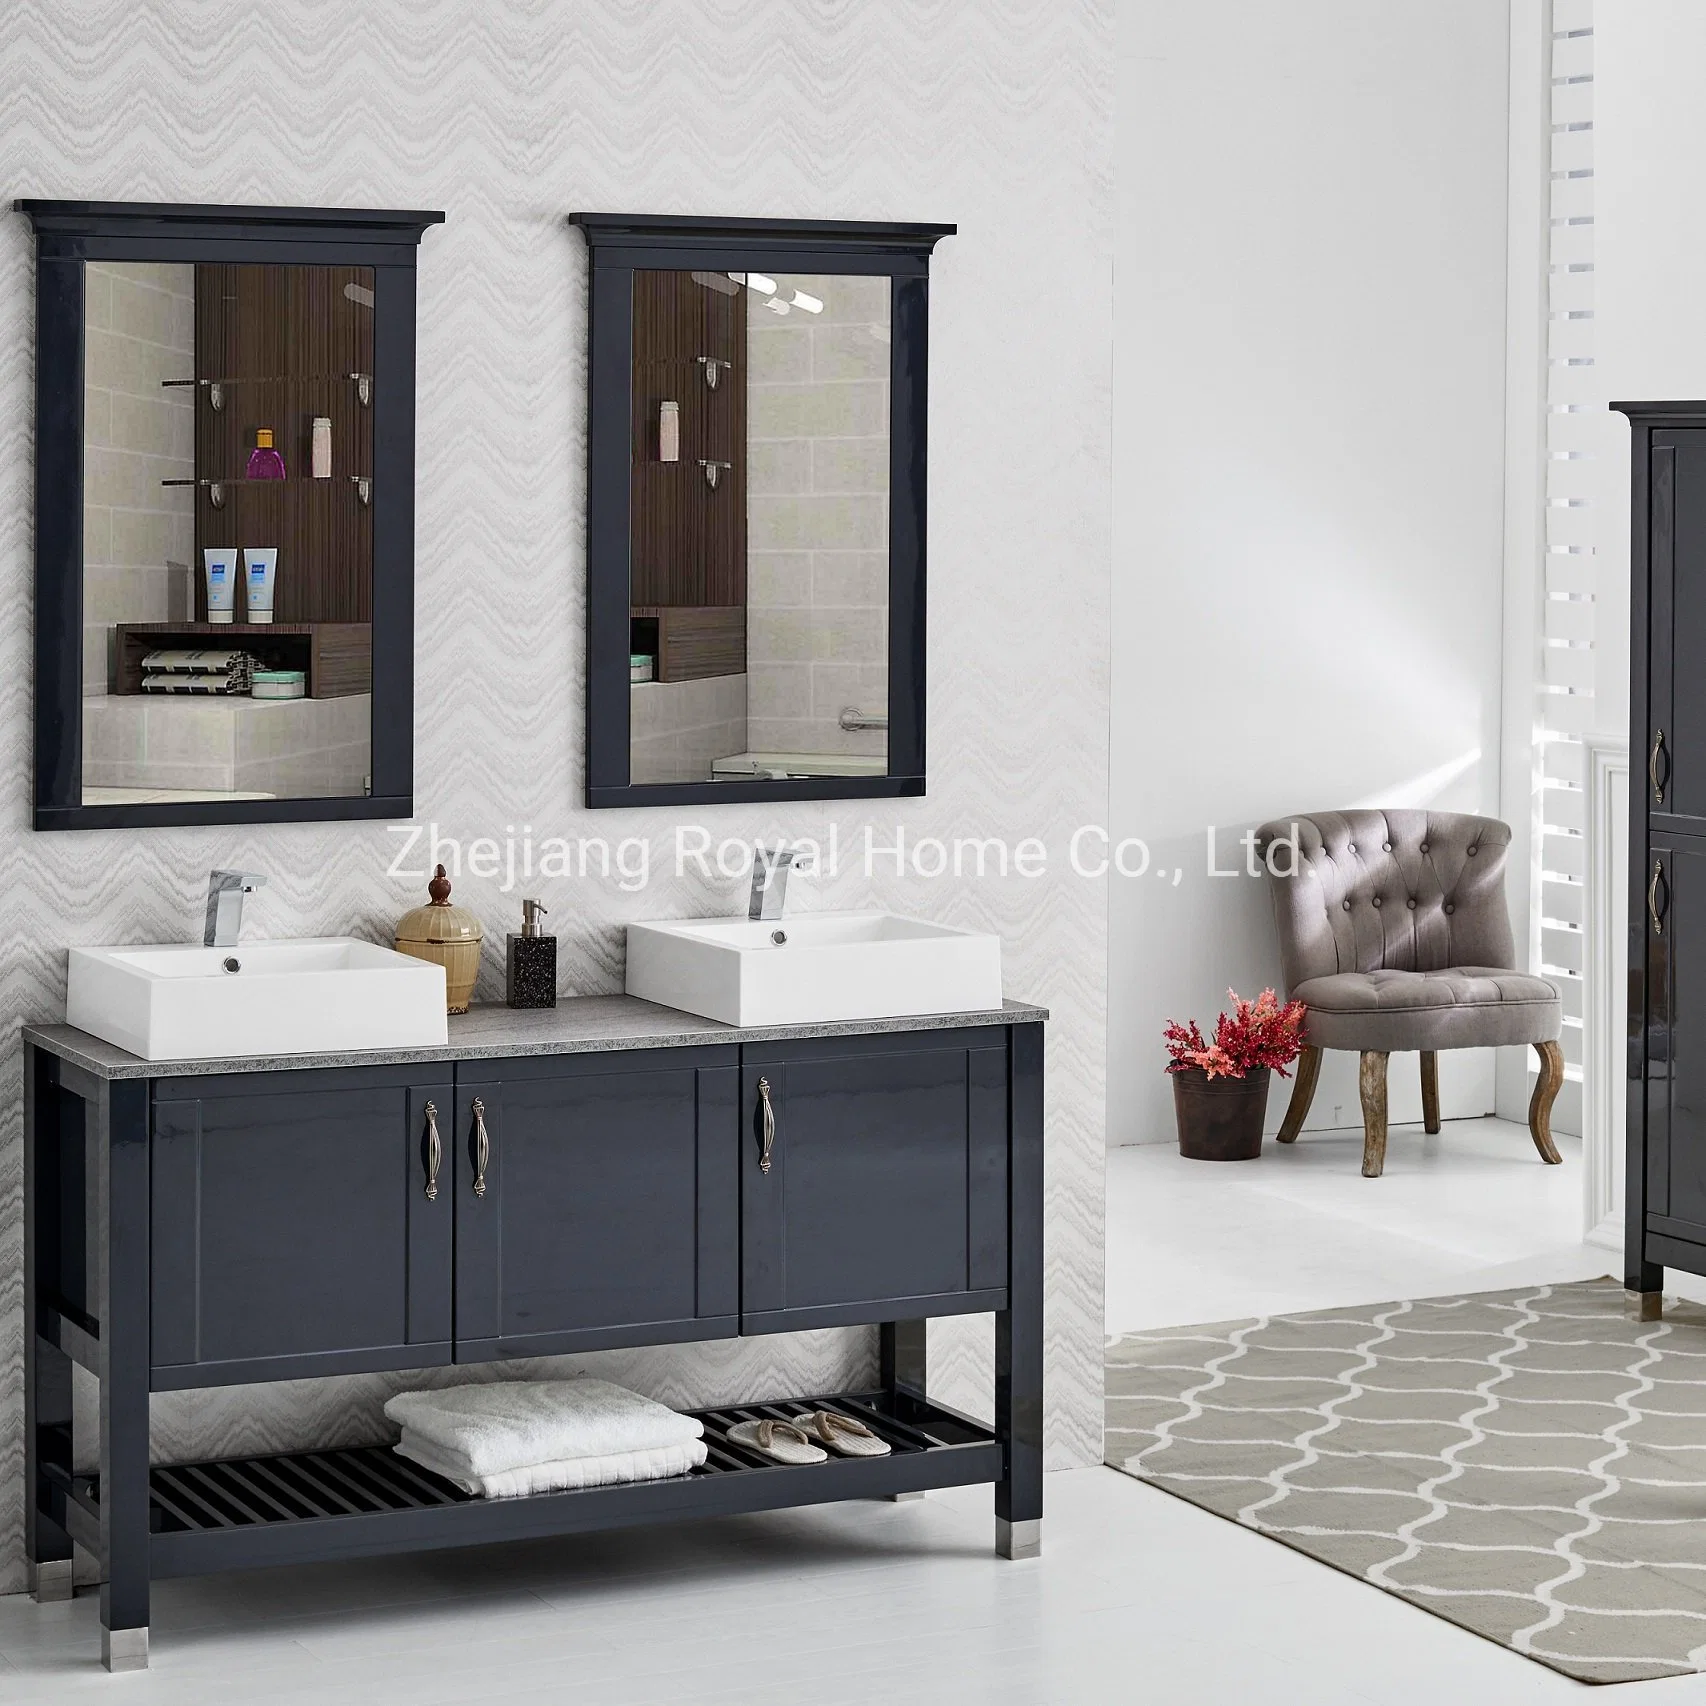 Wholesale/Supplier Price Modern Wooden Lacquer Mirror Bathroom Designer Vanities Basin Bathroom Cabinet